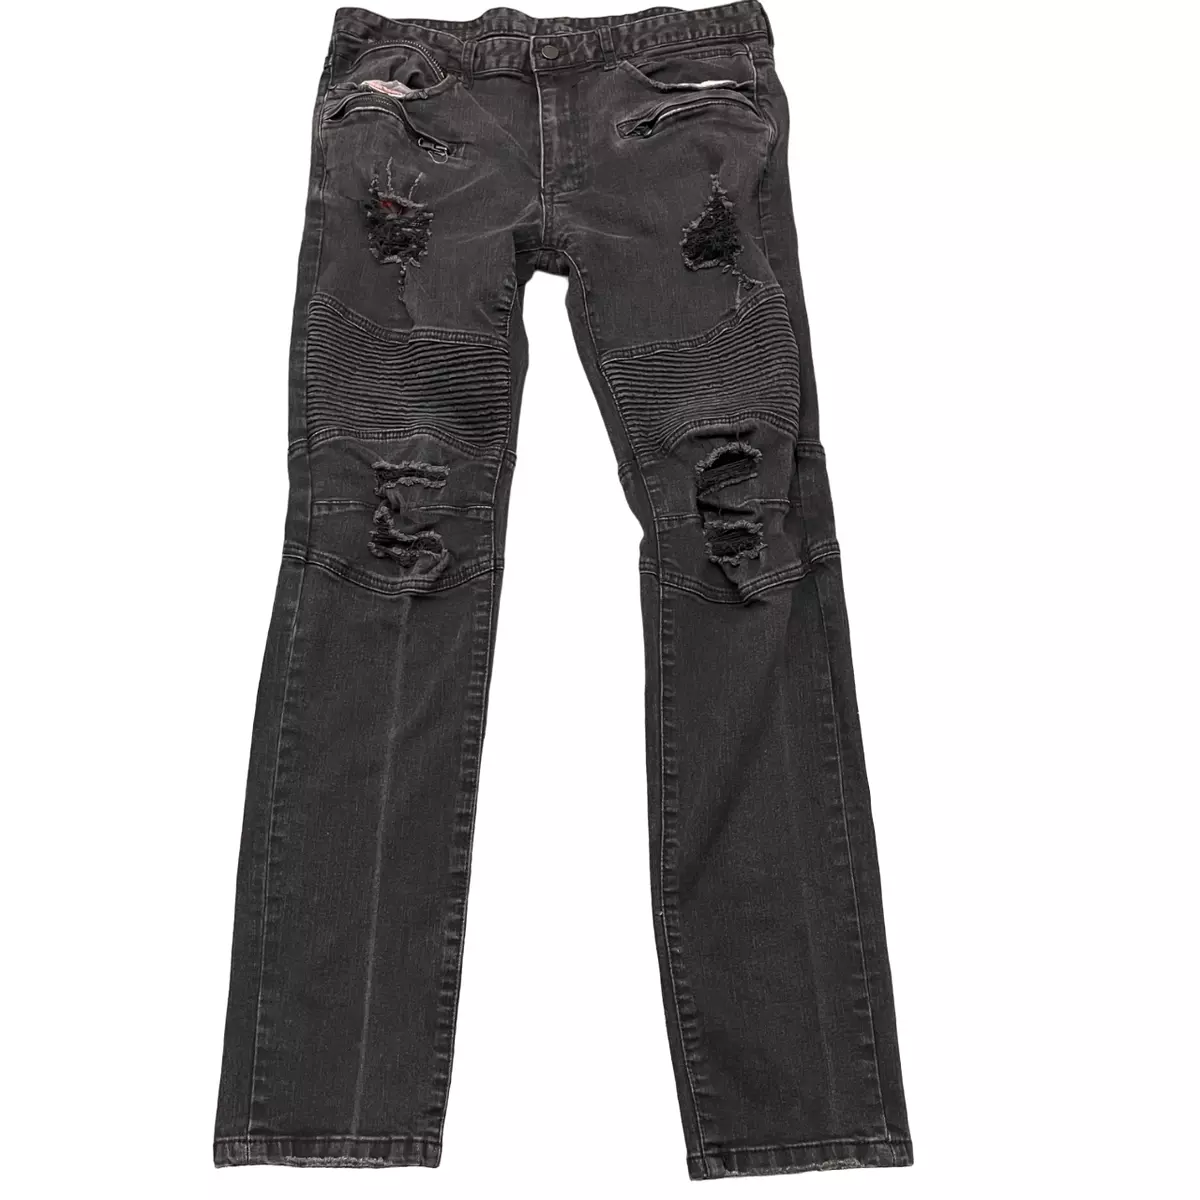 Rockstar Original Moto Jeans Black Distressed Biker Ultra Slim Size 36